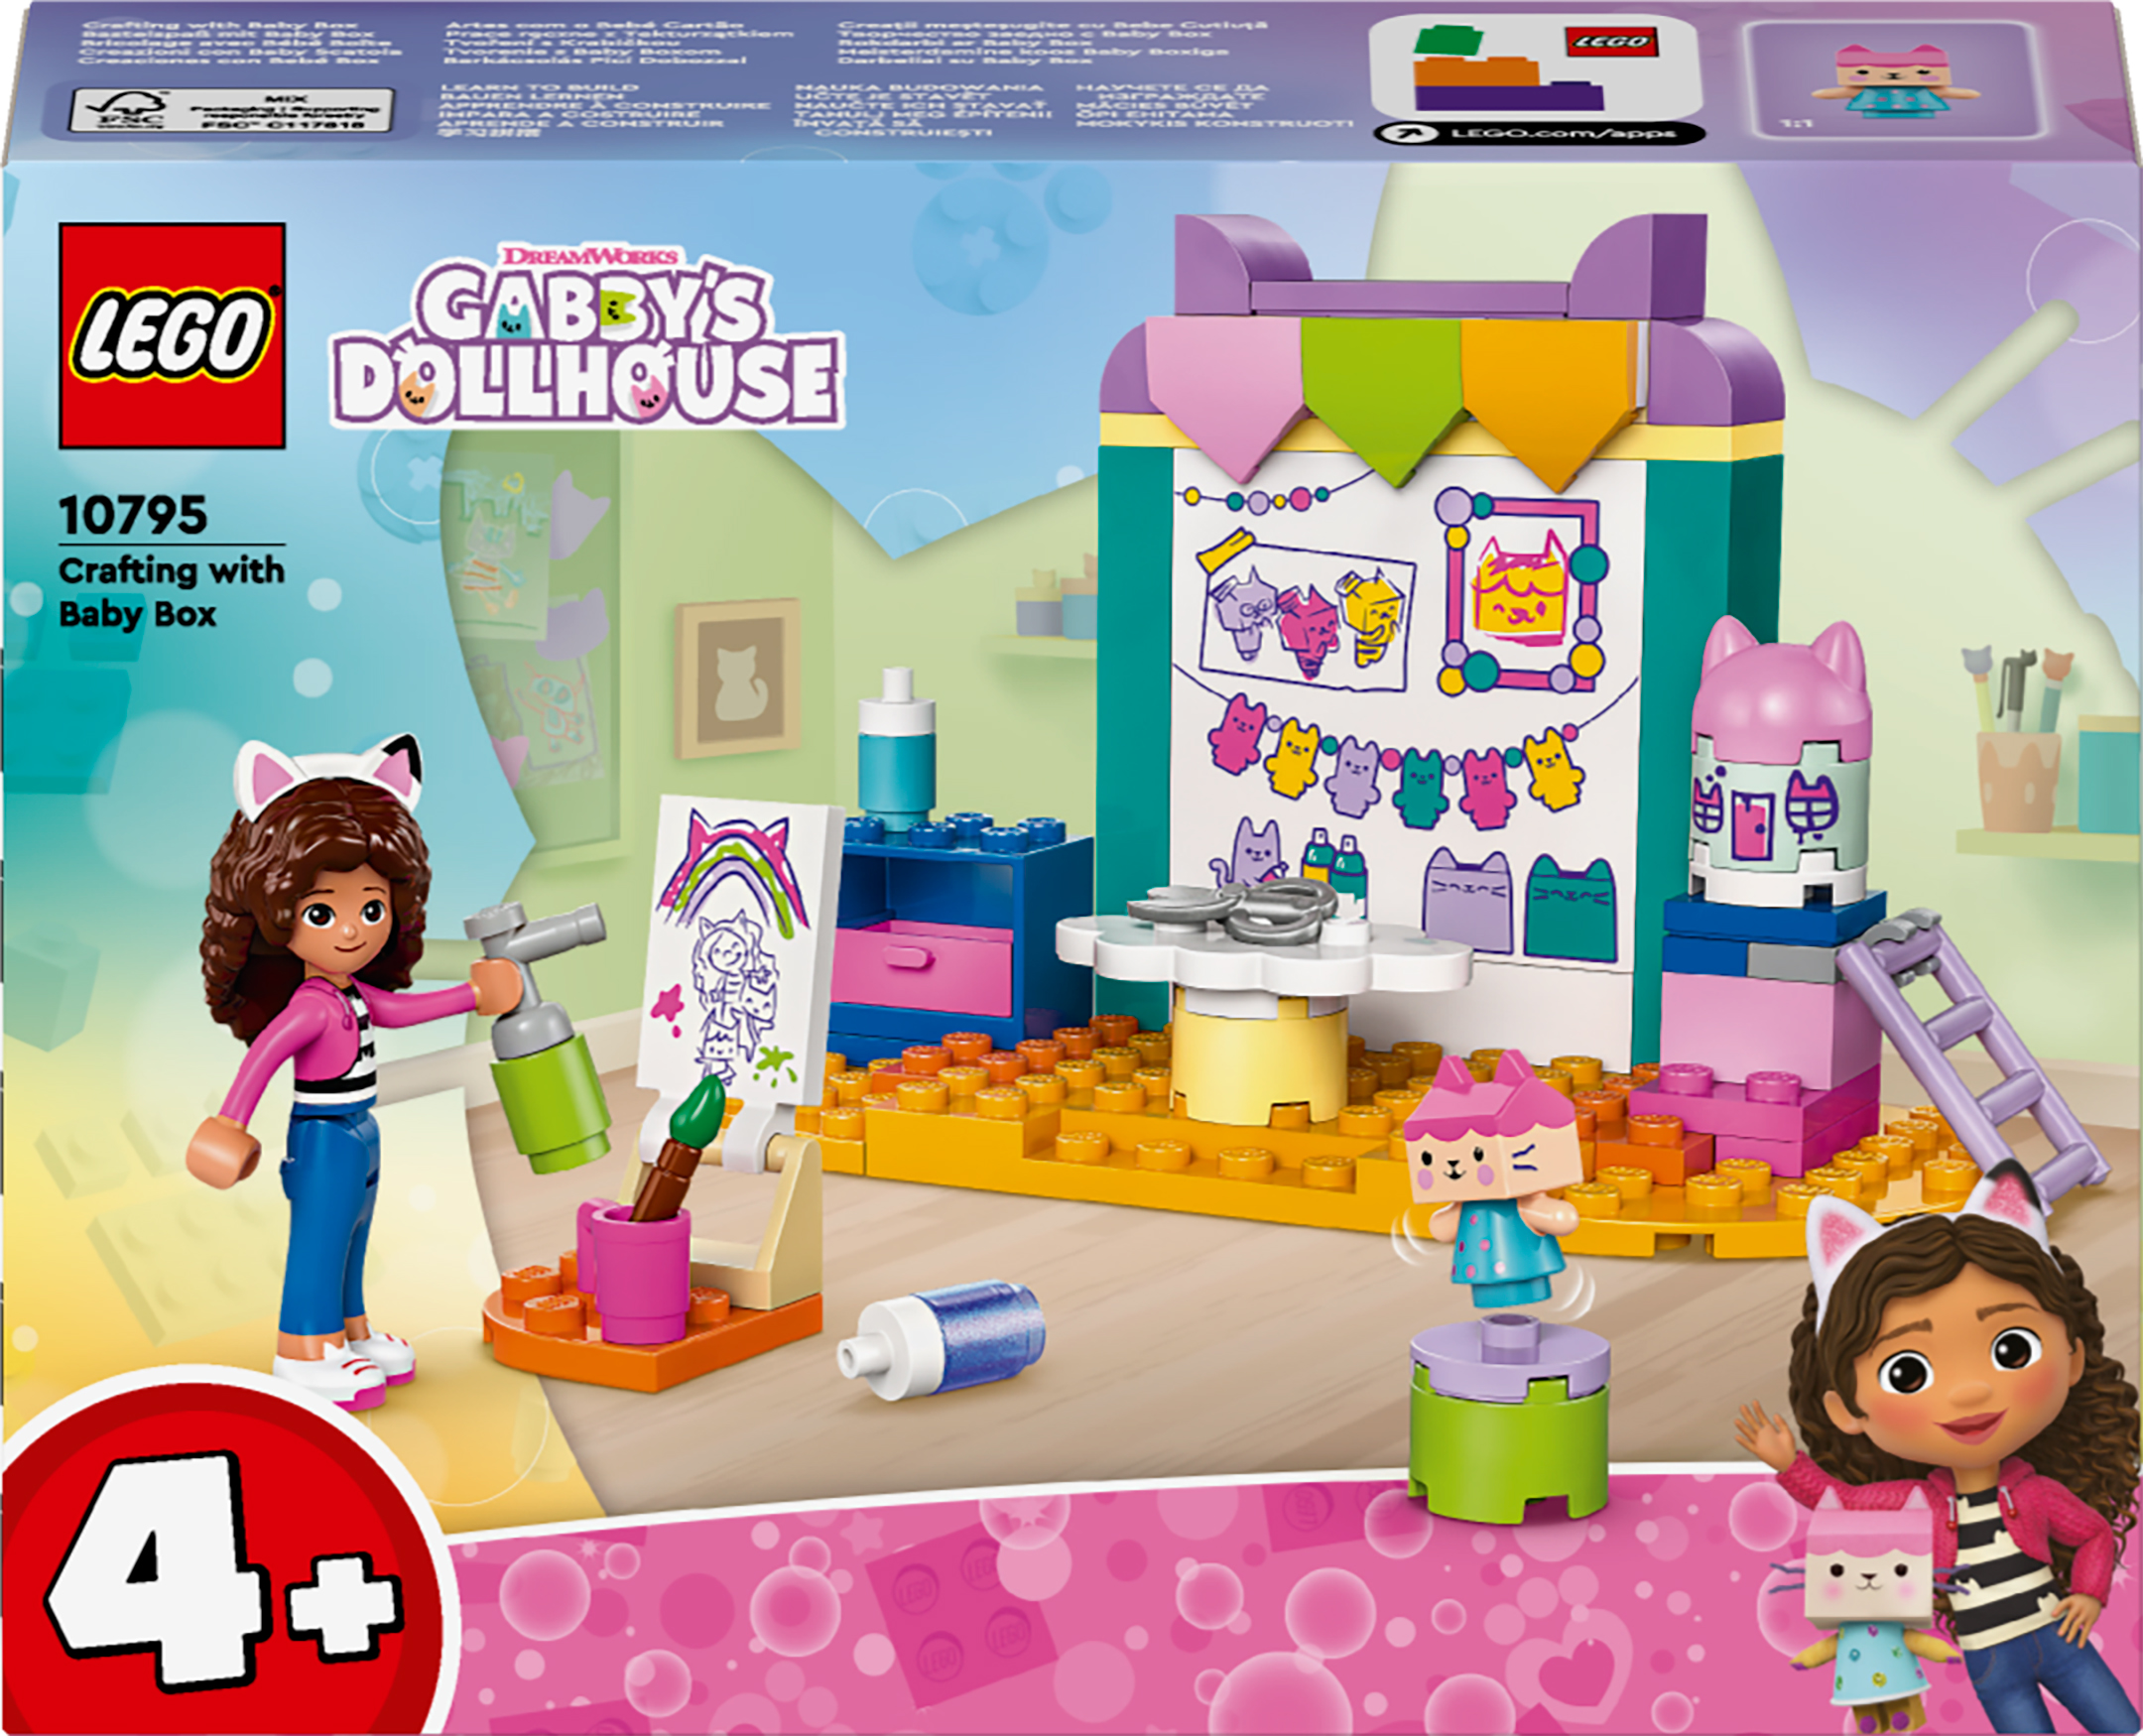 Констуктор LEGO Gabby's Dollhouse Делаем вместе з Доцей-Бокс 10795 фото 3